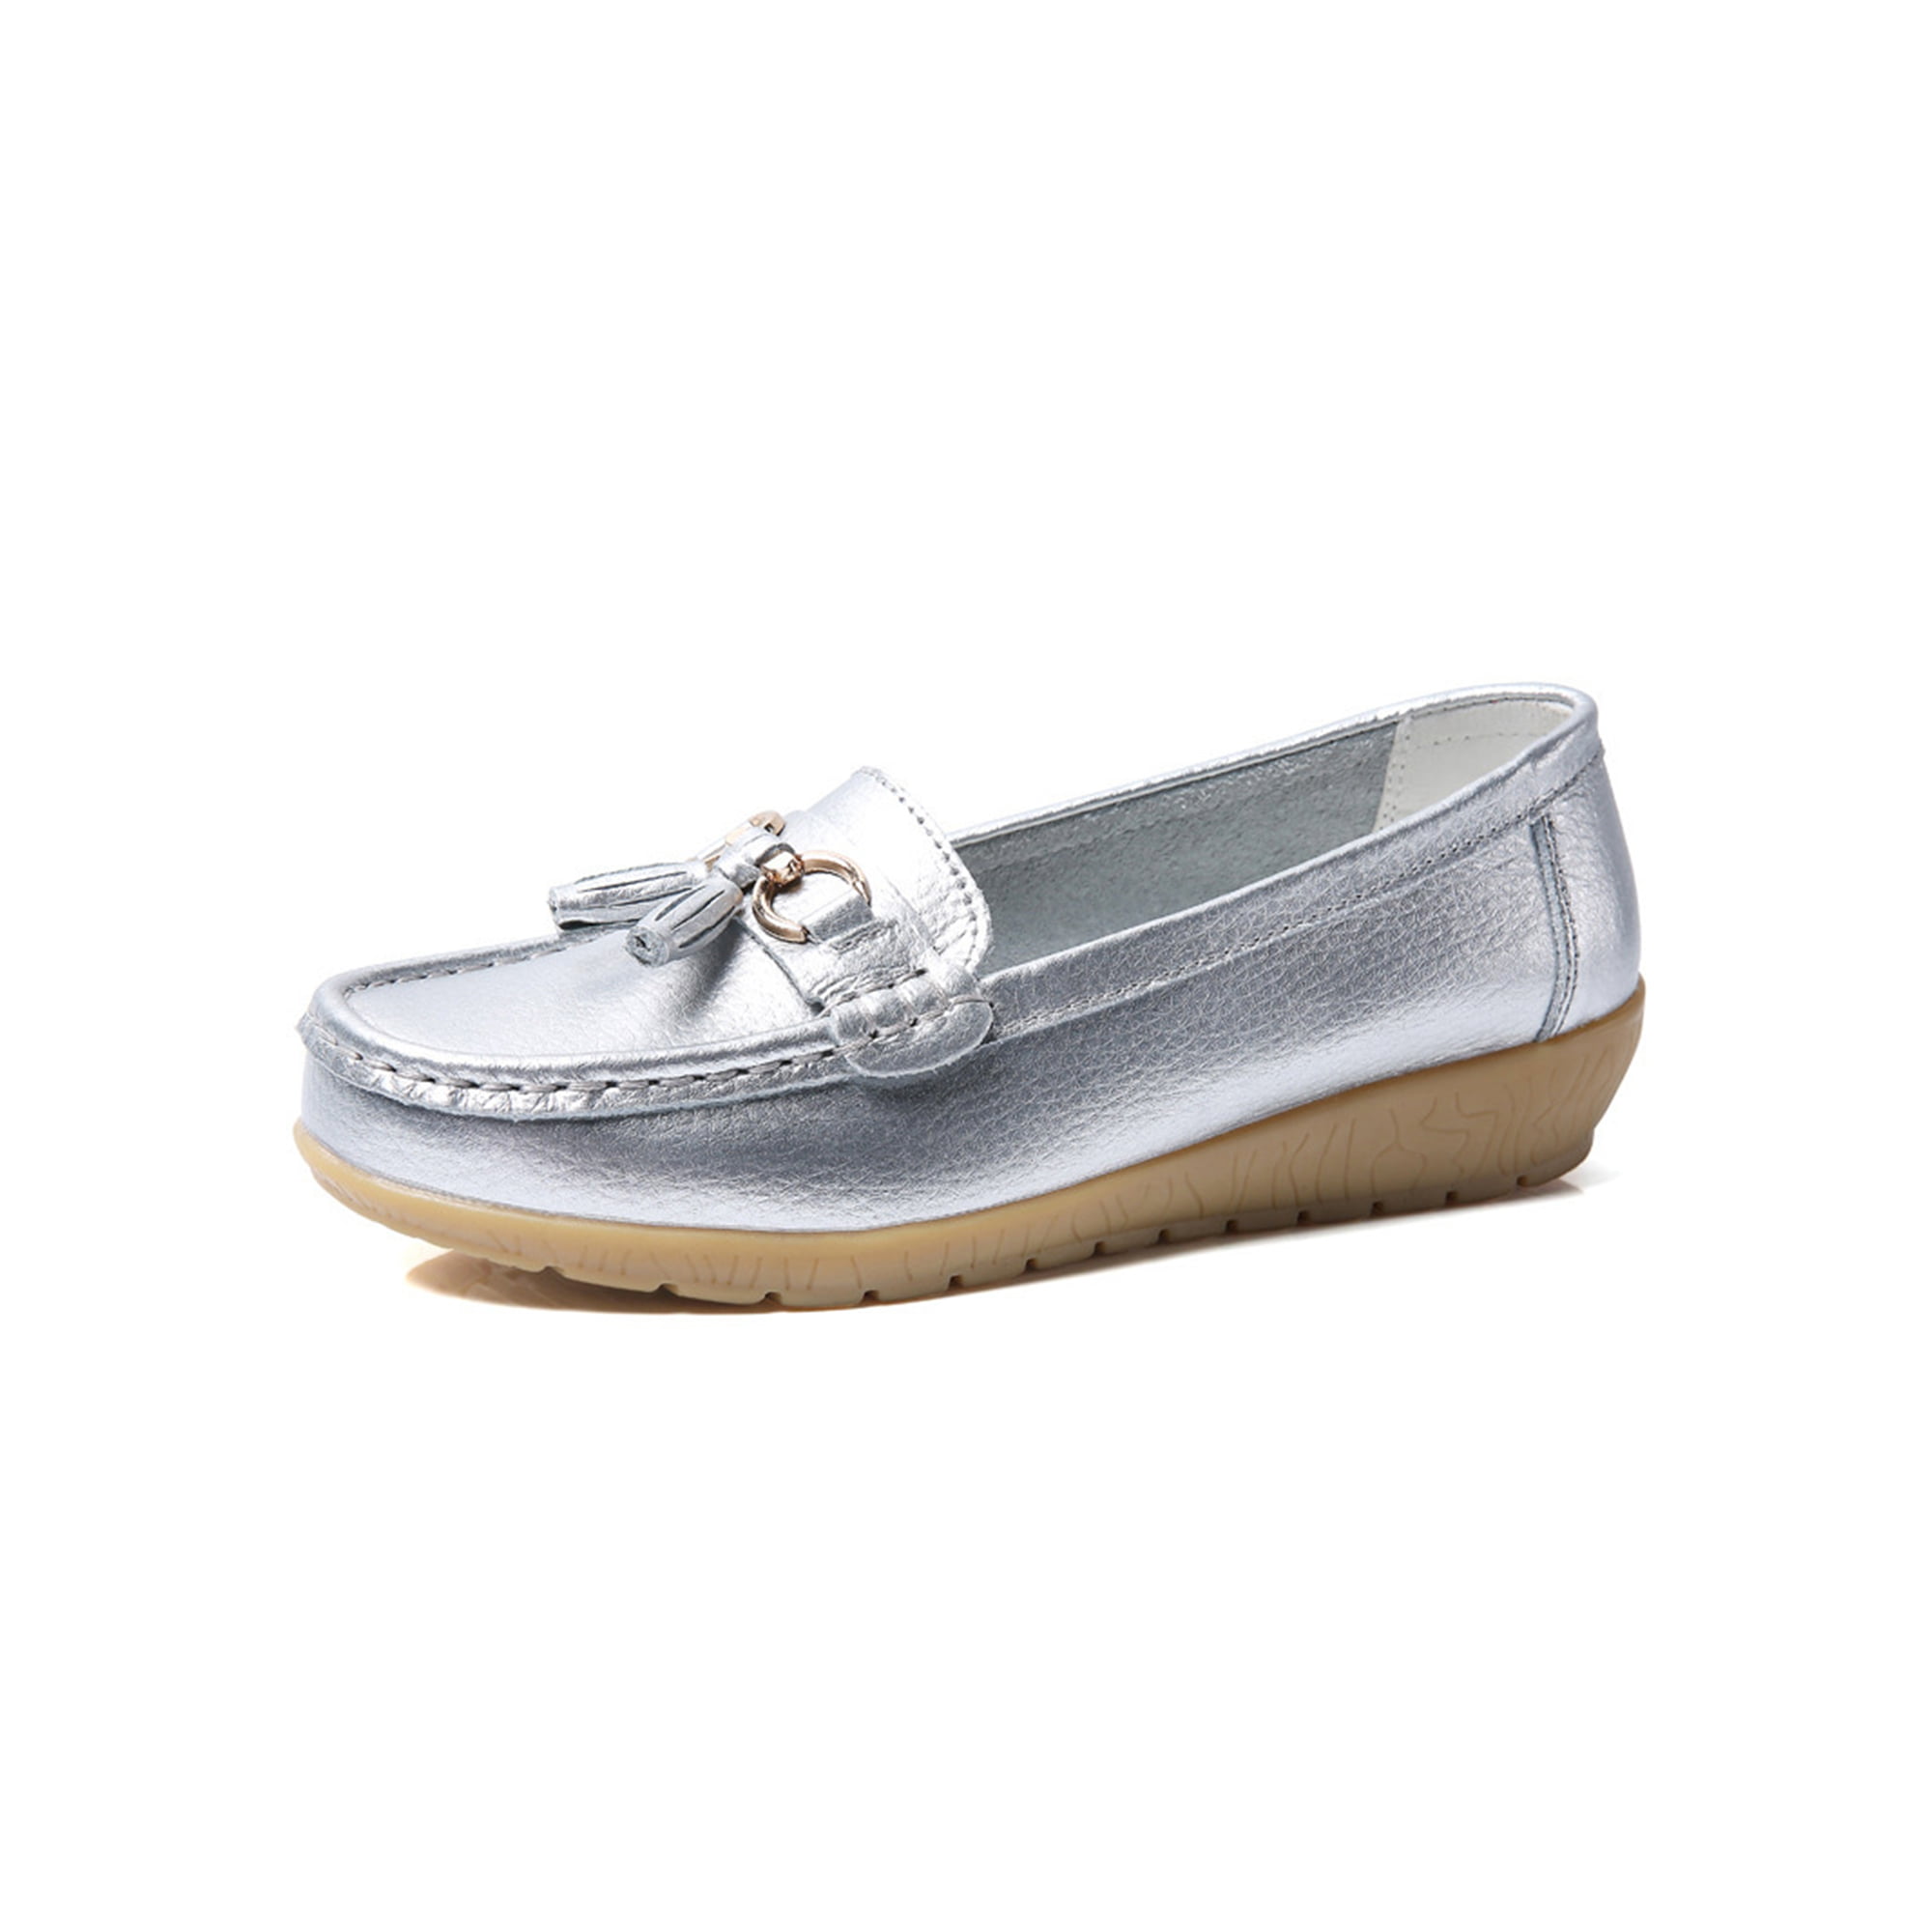 UKAP Women's Leather Loafer Slip On Moccasin Shoes Silver - Walmart.com